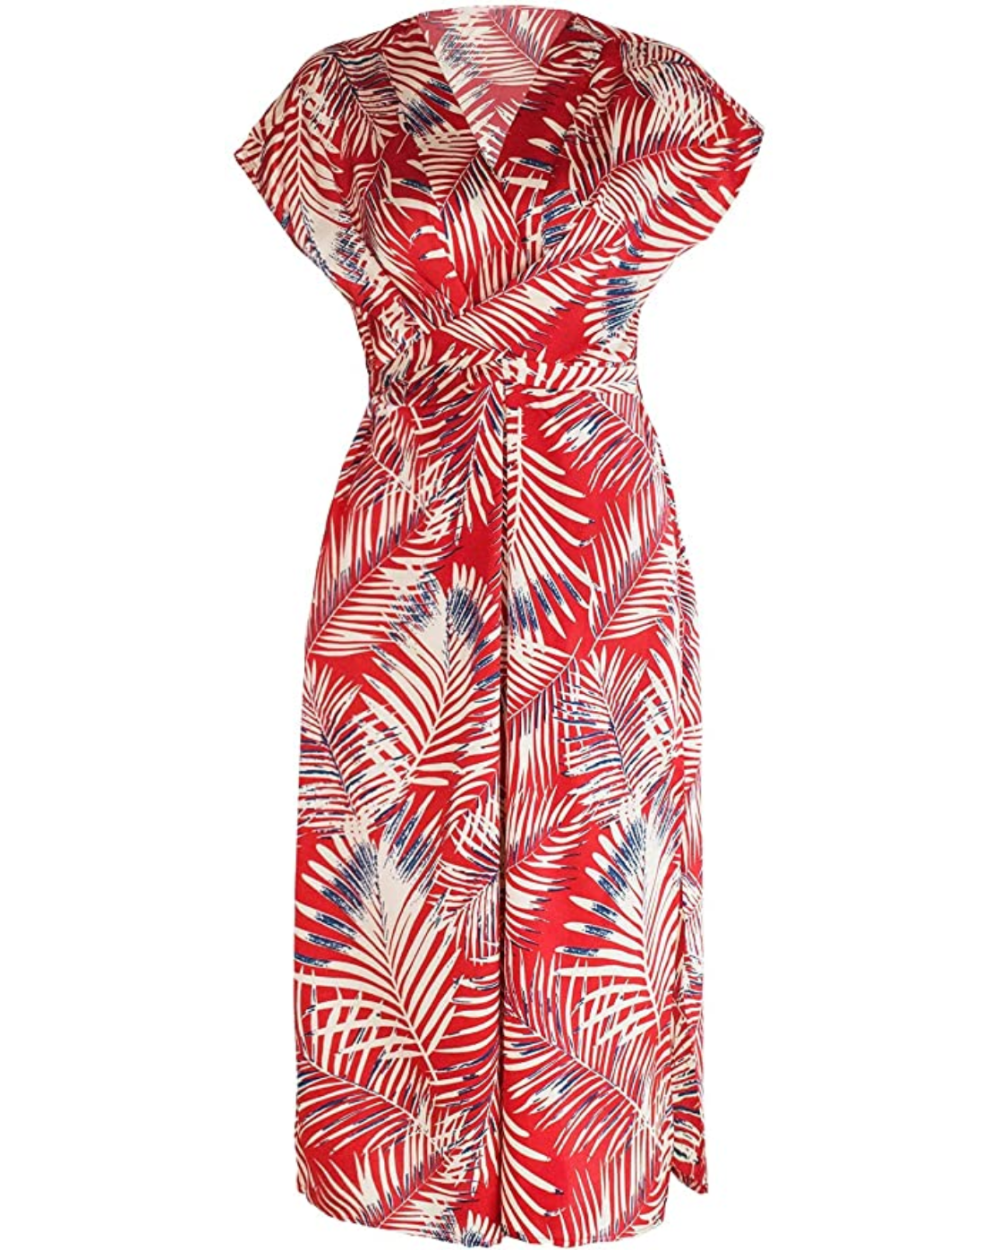 CUPSHE Women's Red Leaf Print Wrap Dress